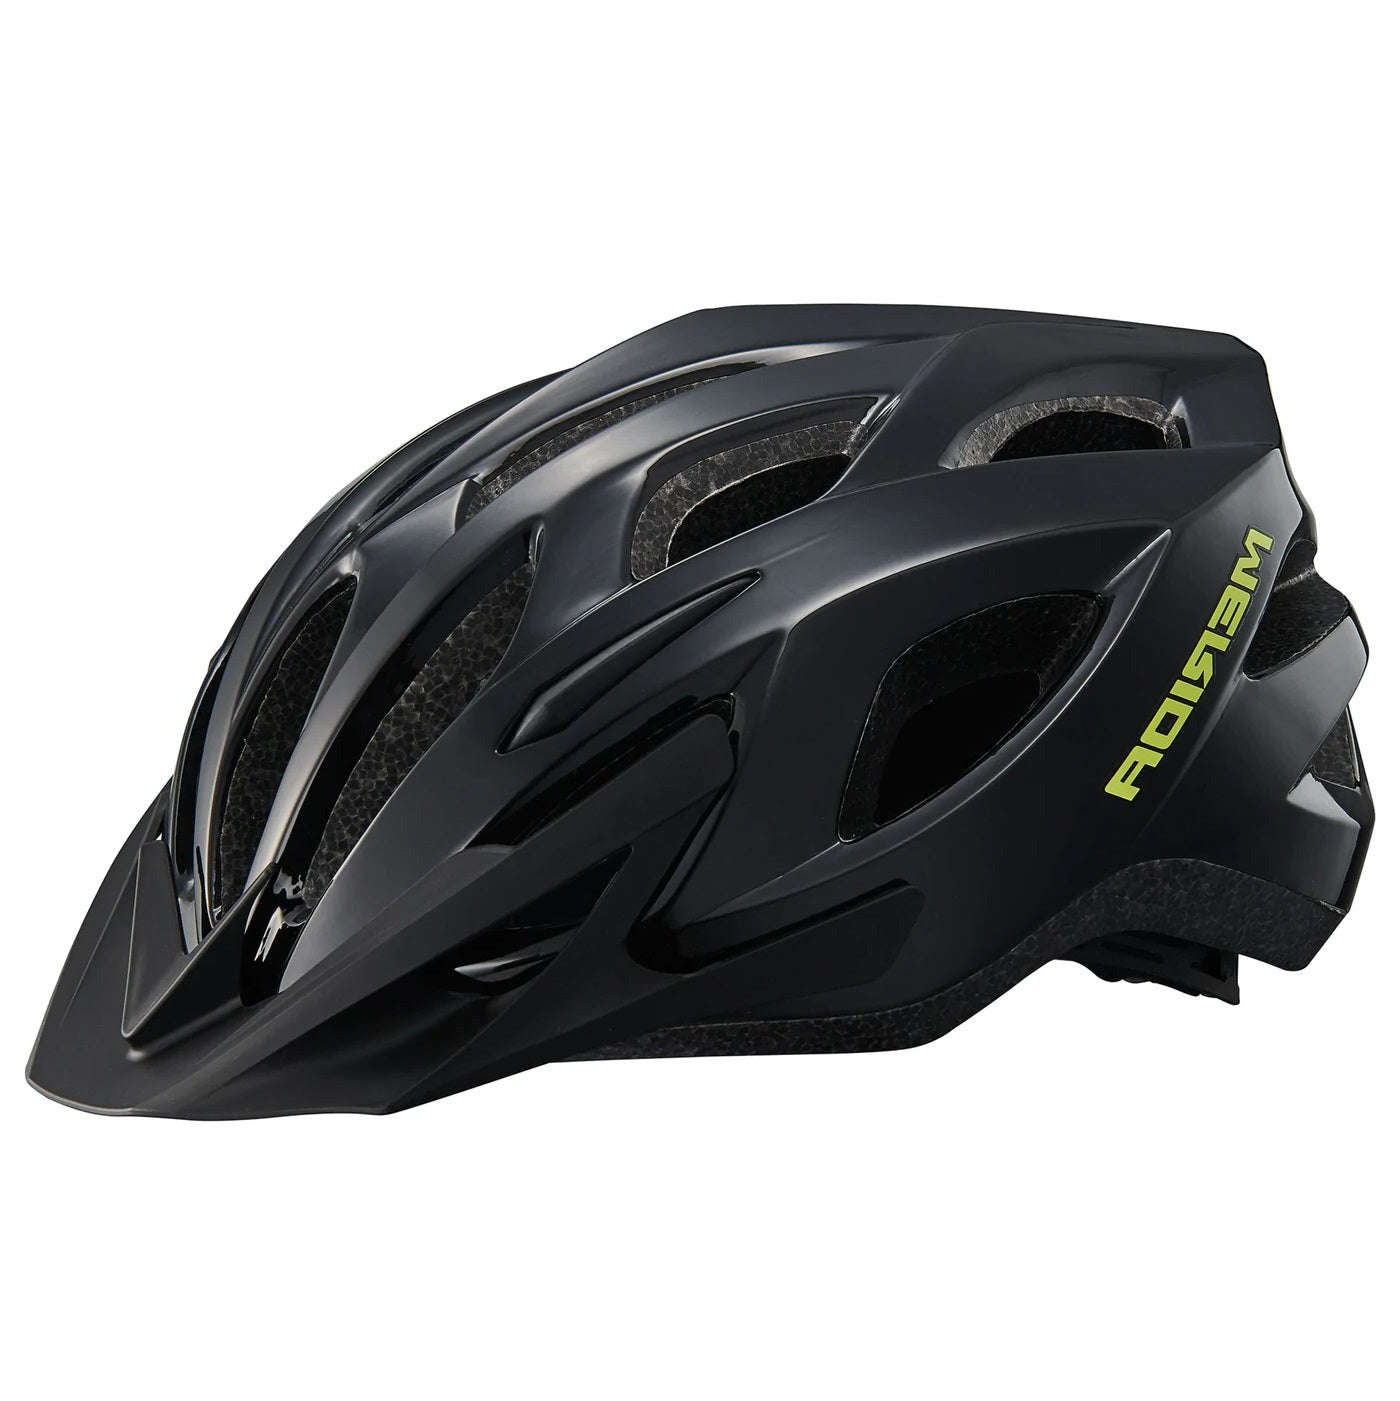 Merida Charger KJ201-A-1 MTB Cycling Helmet (Shiny Black/Yellow)